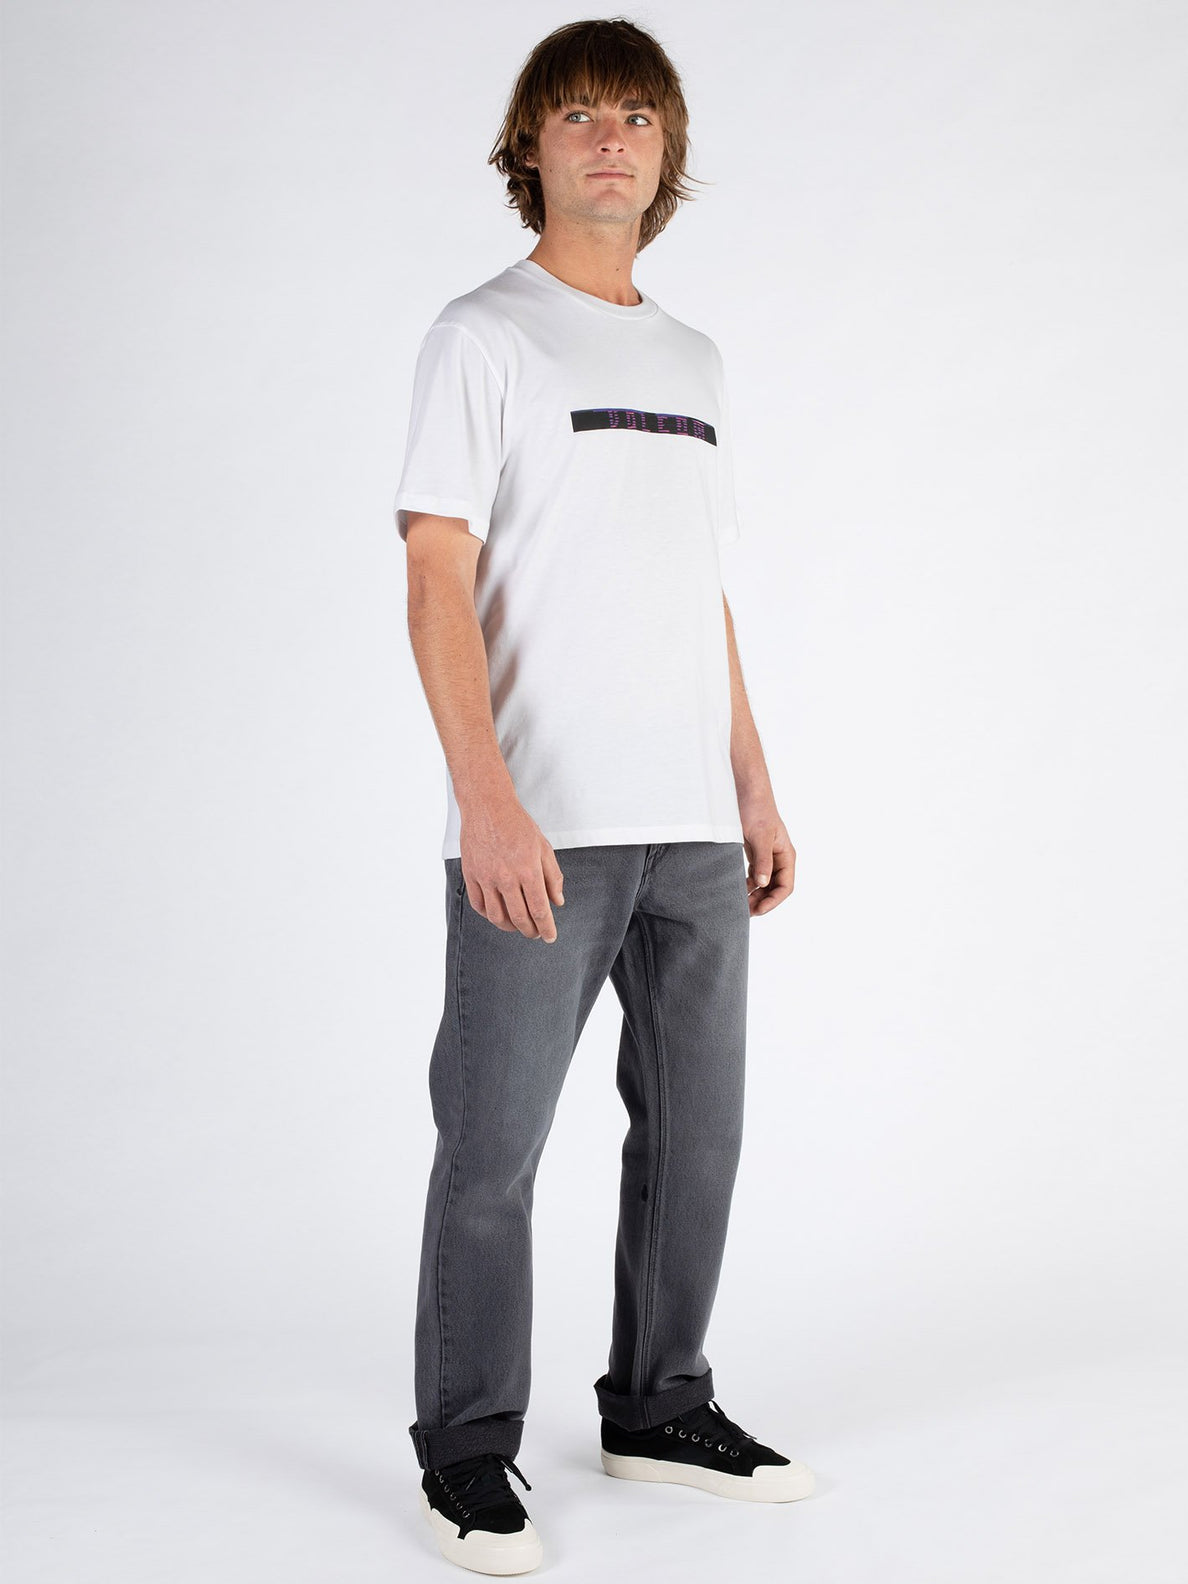 Flowscillator T-shirt - WHITE (A4332107_WHT) [50]